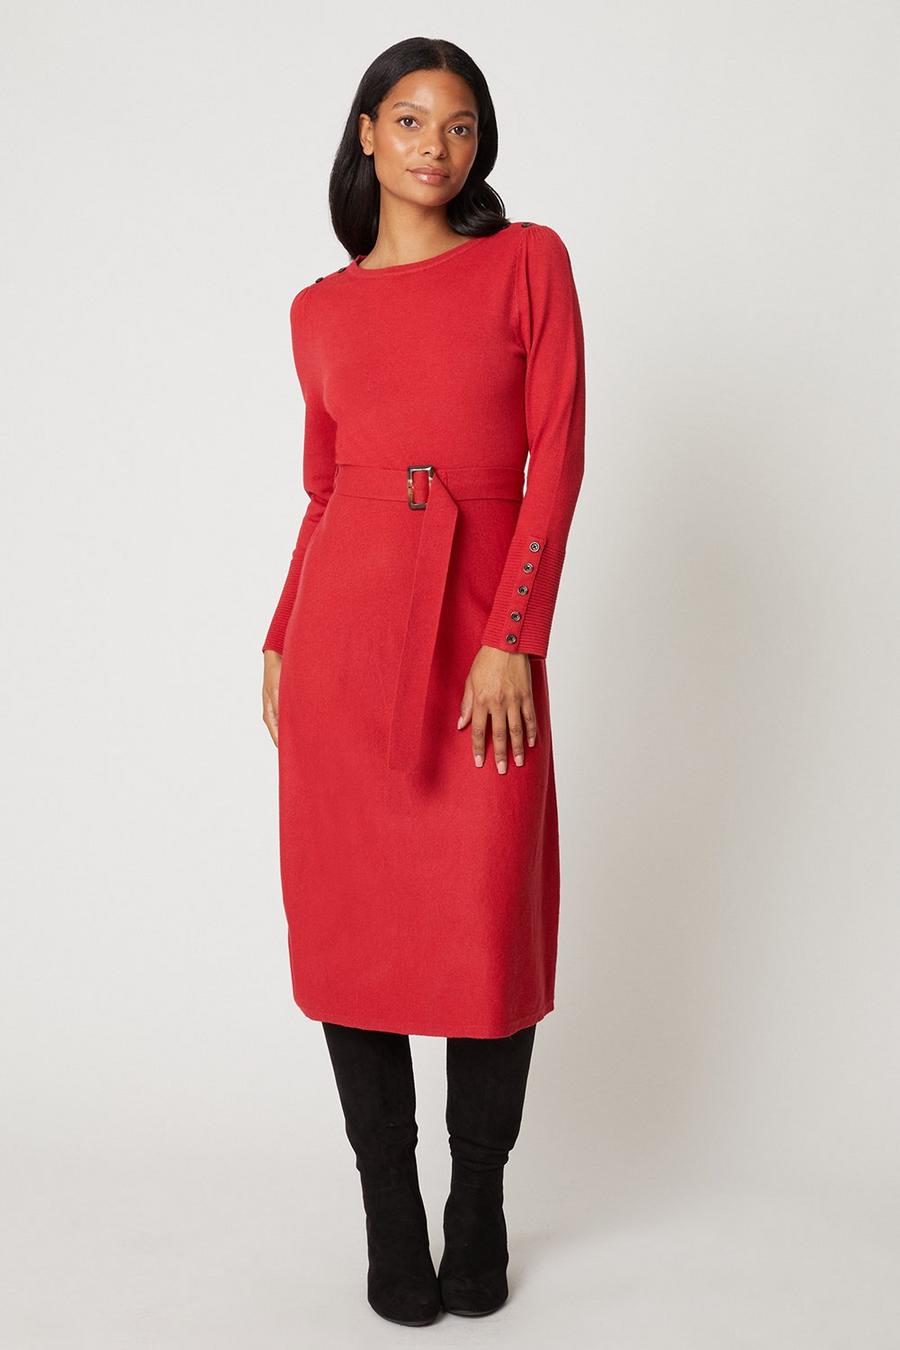 Petite Red Slash Neck Belted Knitted Dress